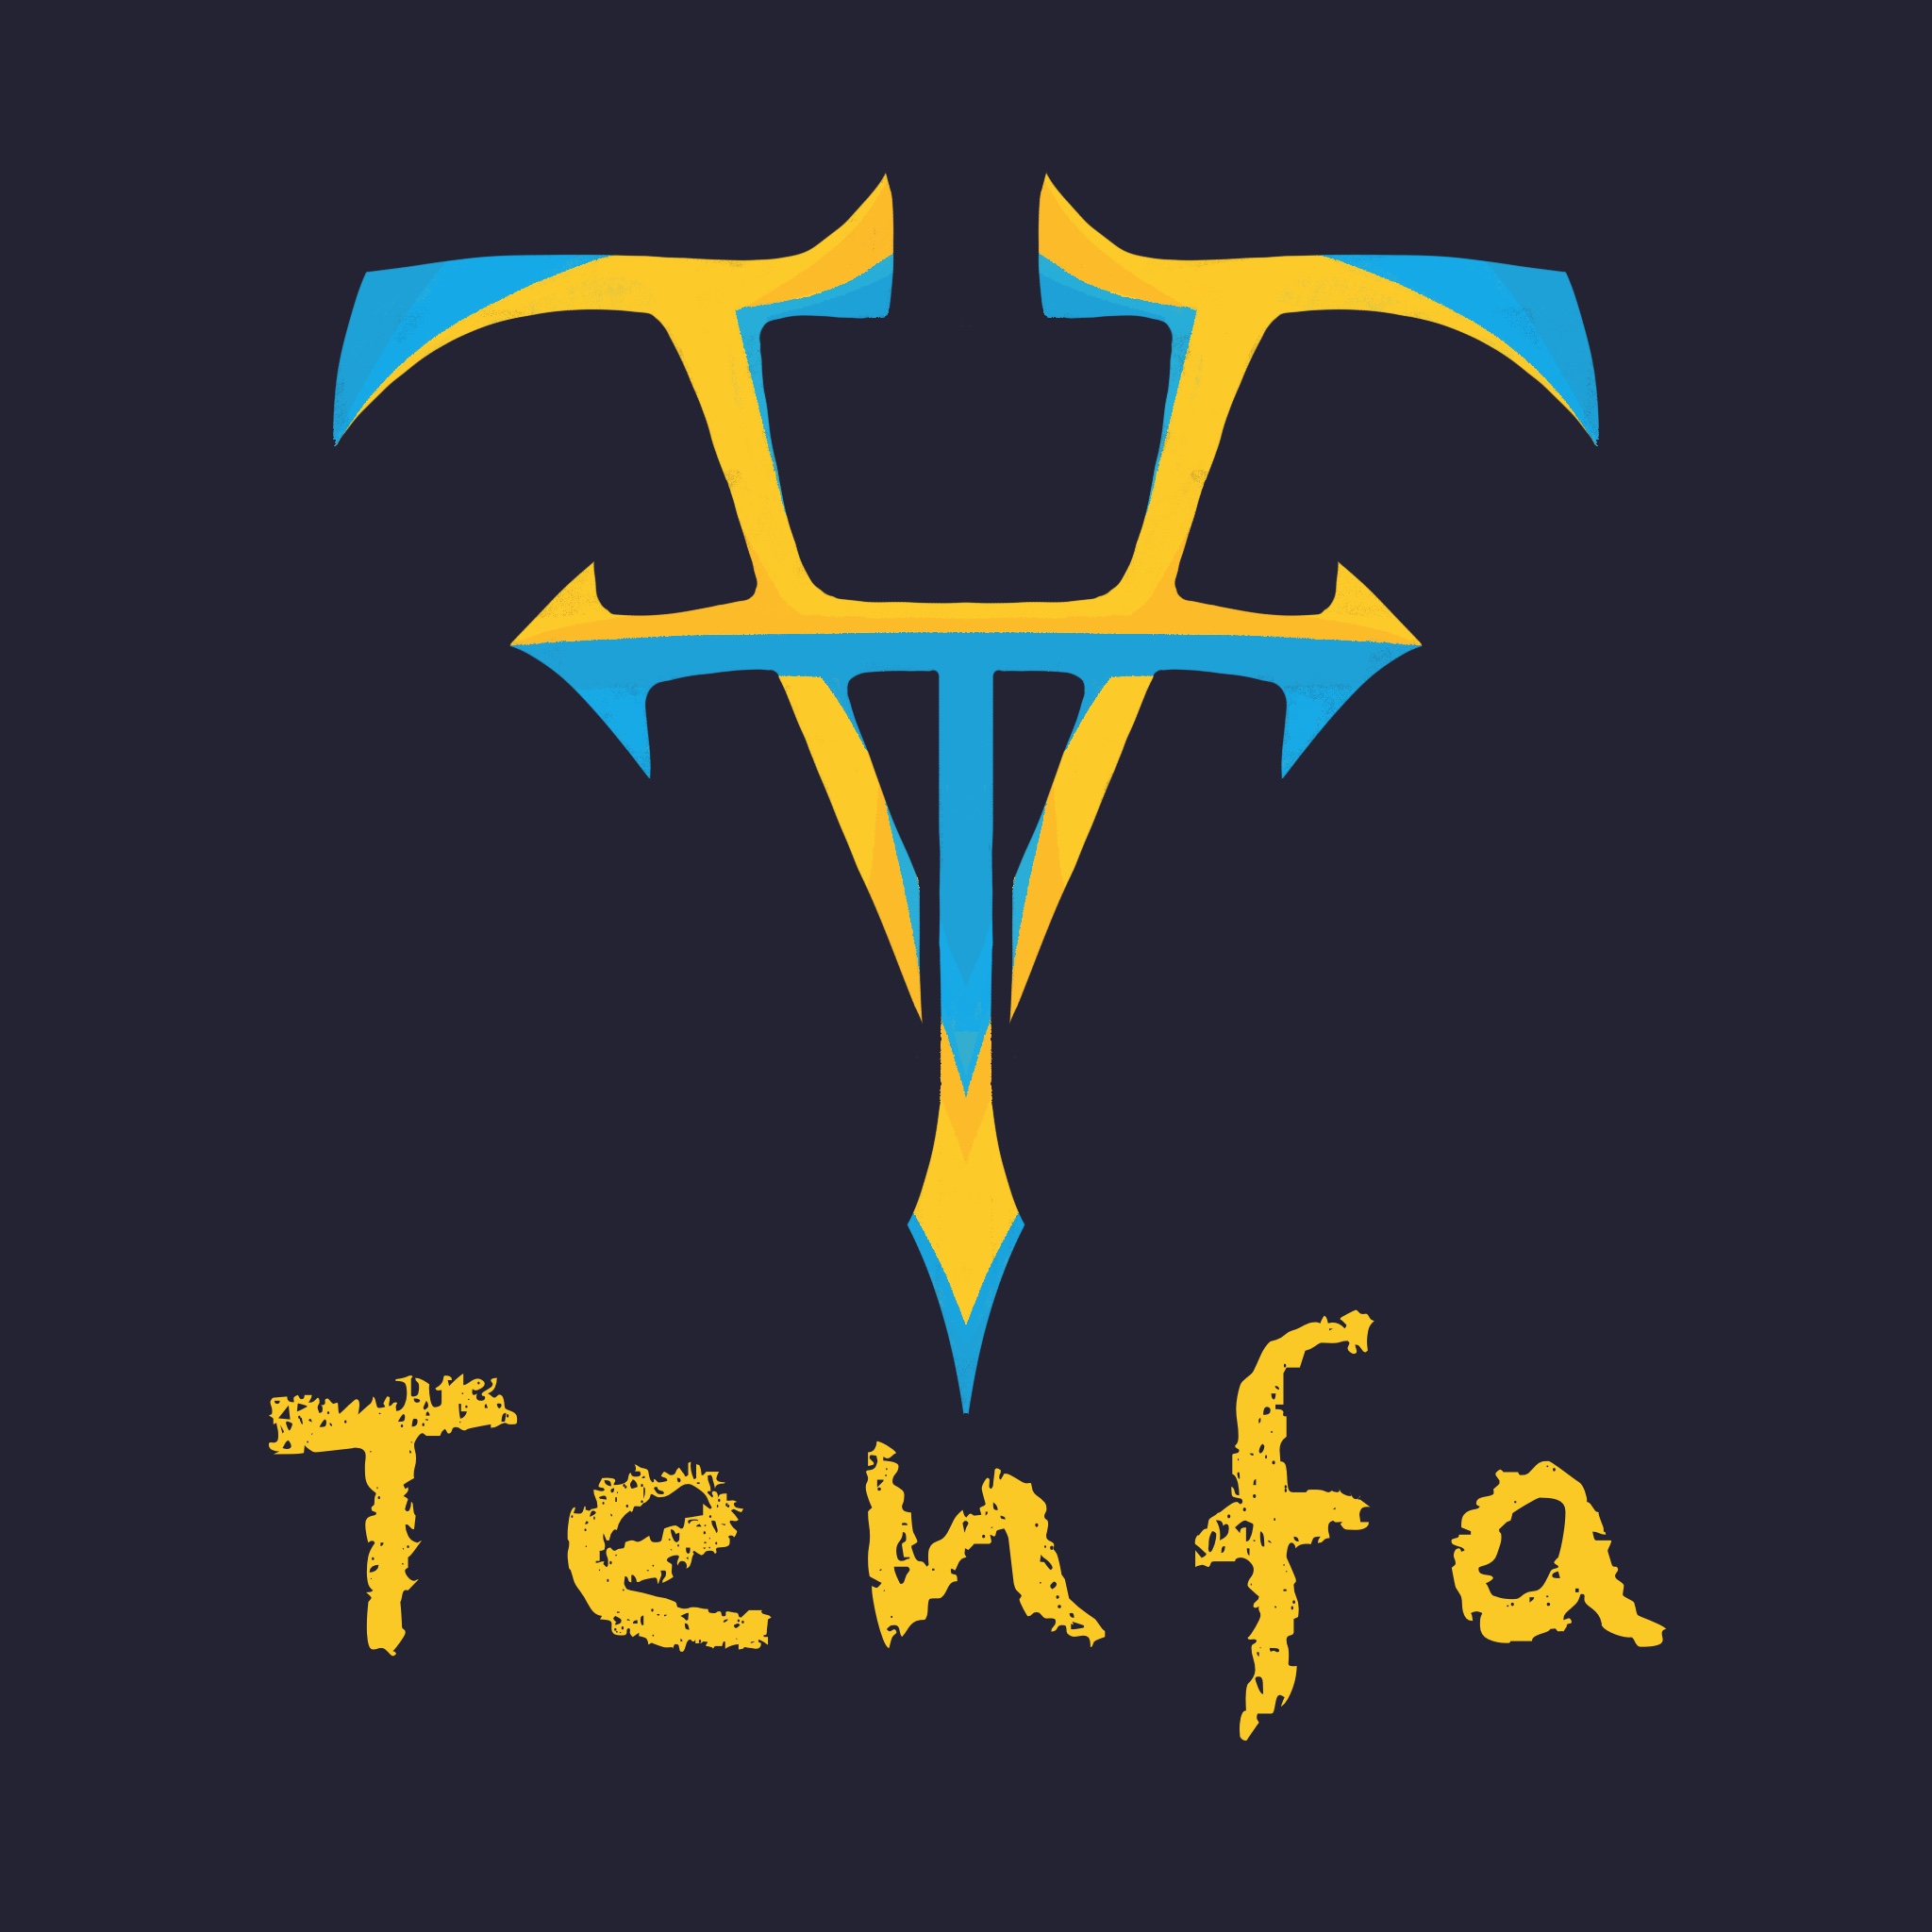 Tenfa